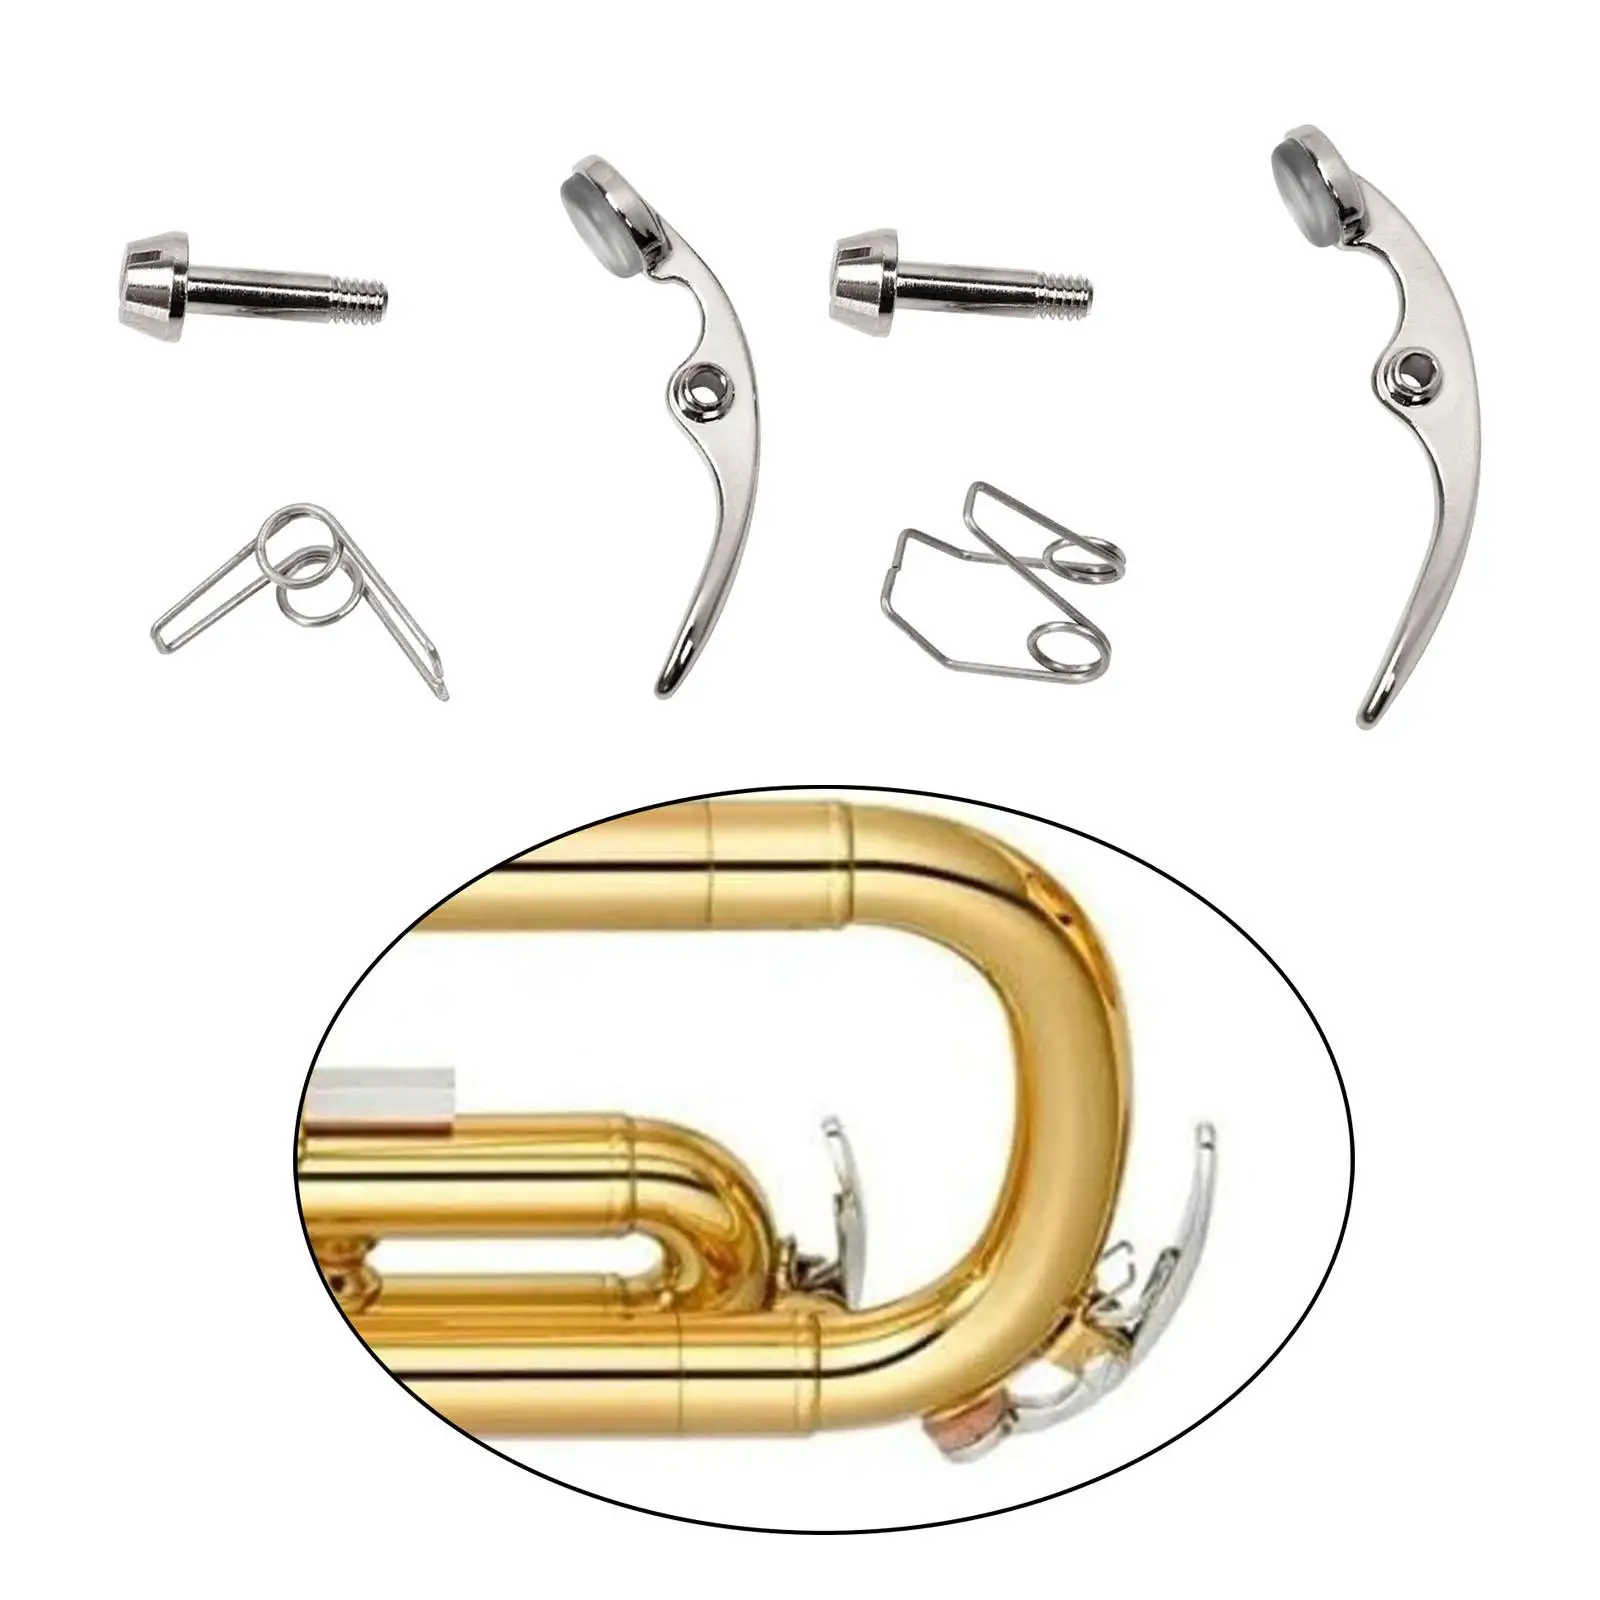 Trumpet Water Keys Trumpet Maintenance Repairing Trumpet Accessory Replacement Parts for Wind Instrument Trumpet Trombone